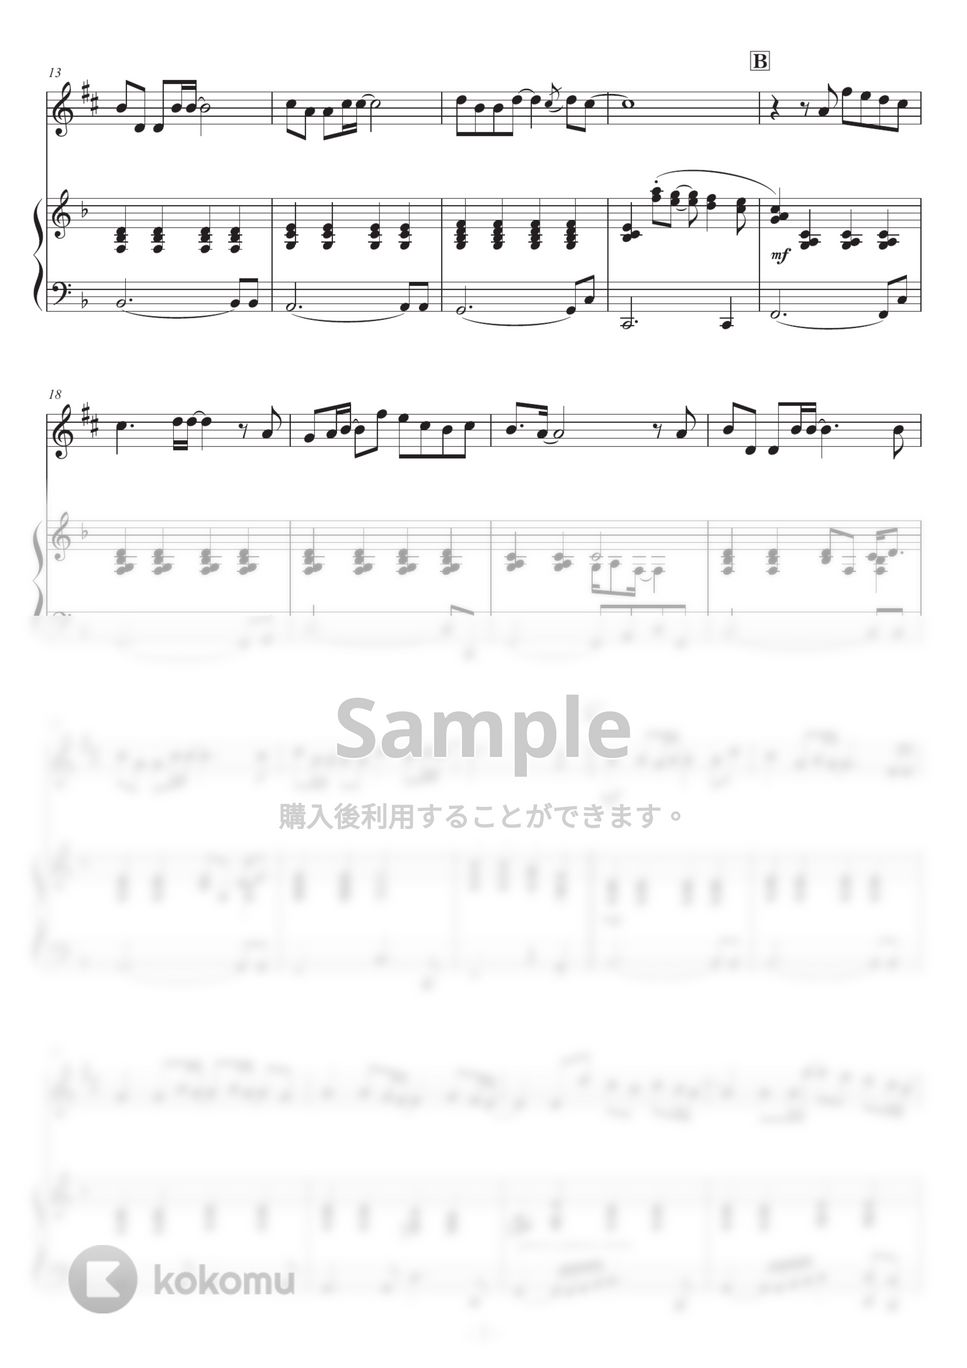 DREAMS COME TRUE - 【アルトサックス】未来予想図Ⅱ (ピアノ伴奏付き) by 栗原義継